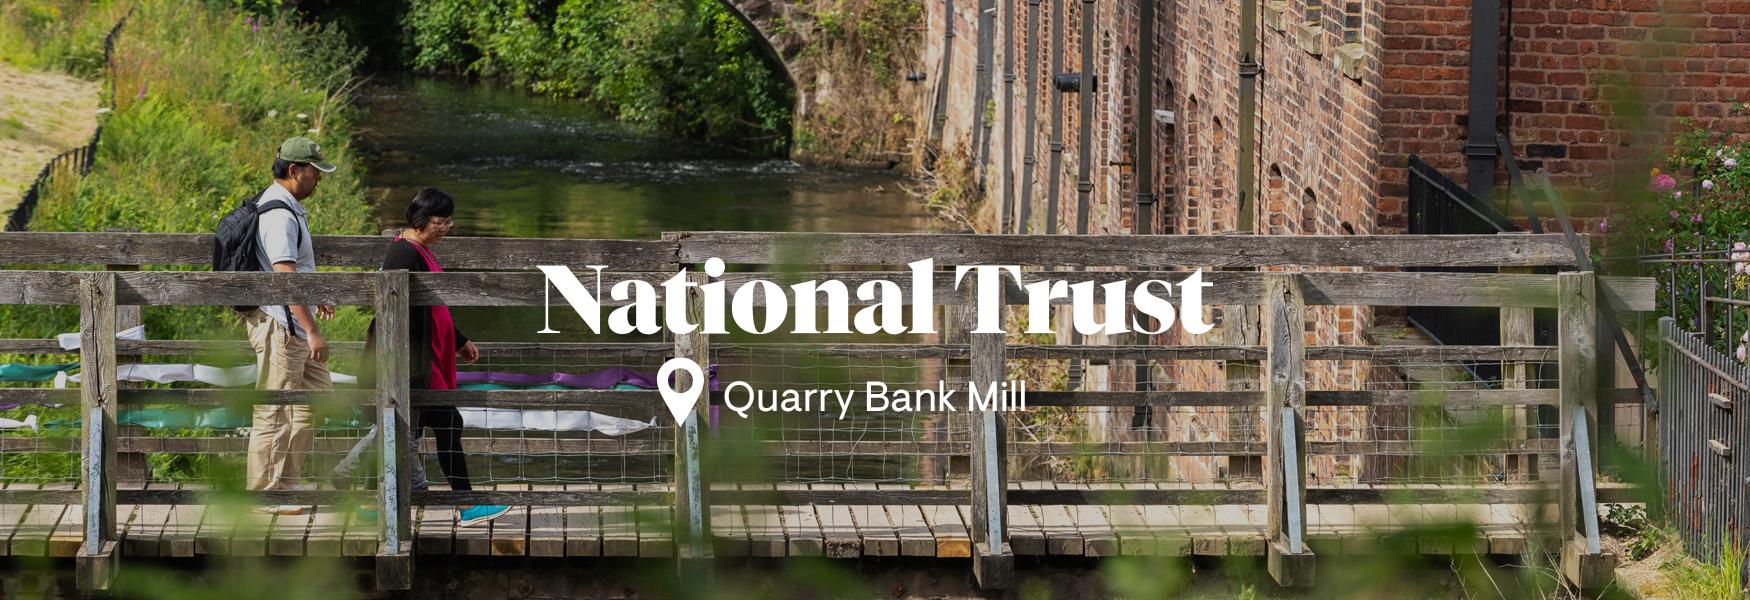 Quarry Bank, National Trust